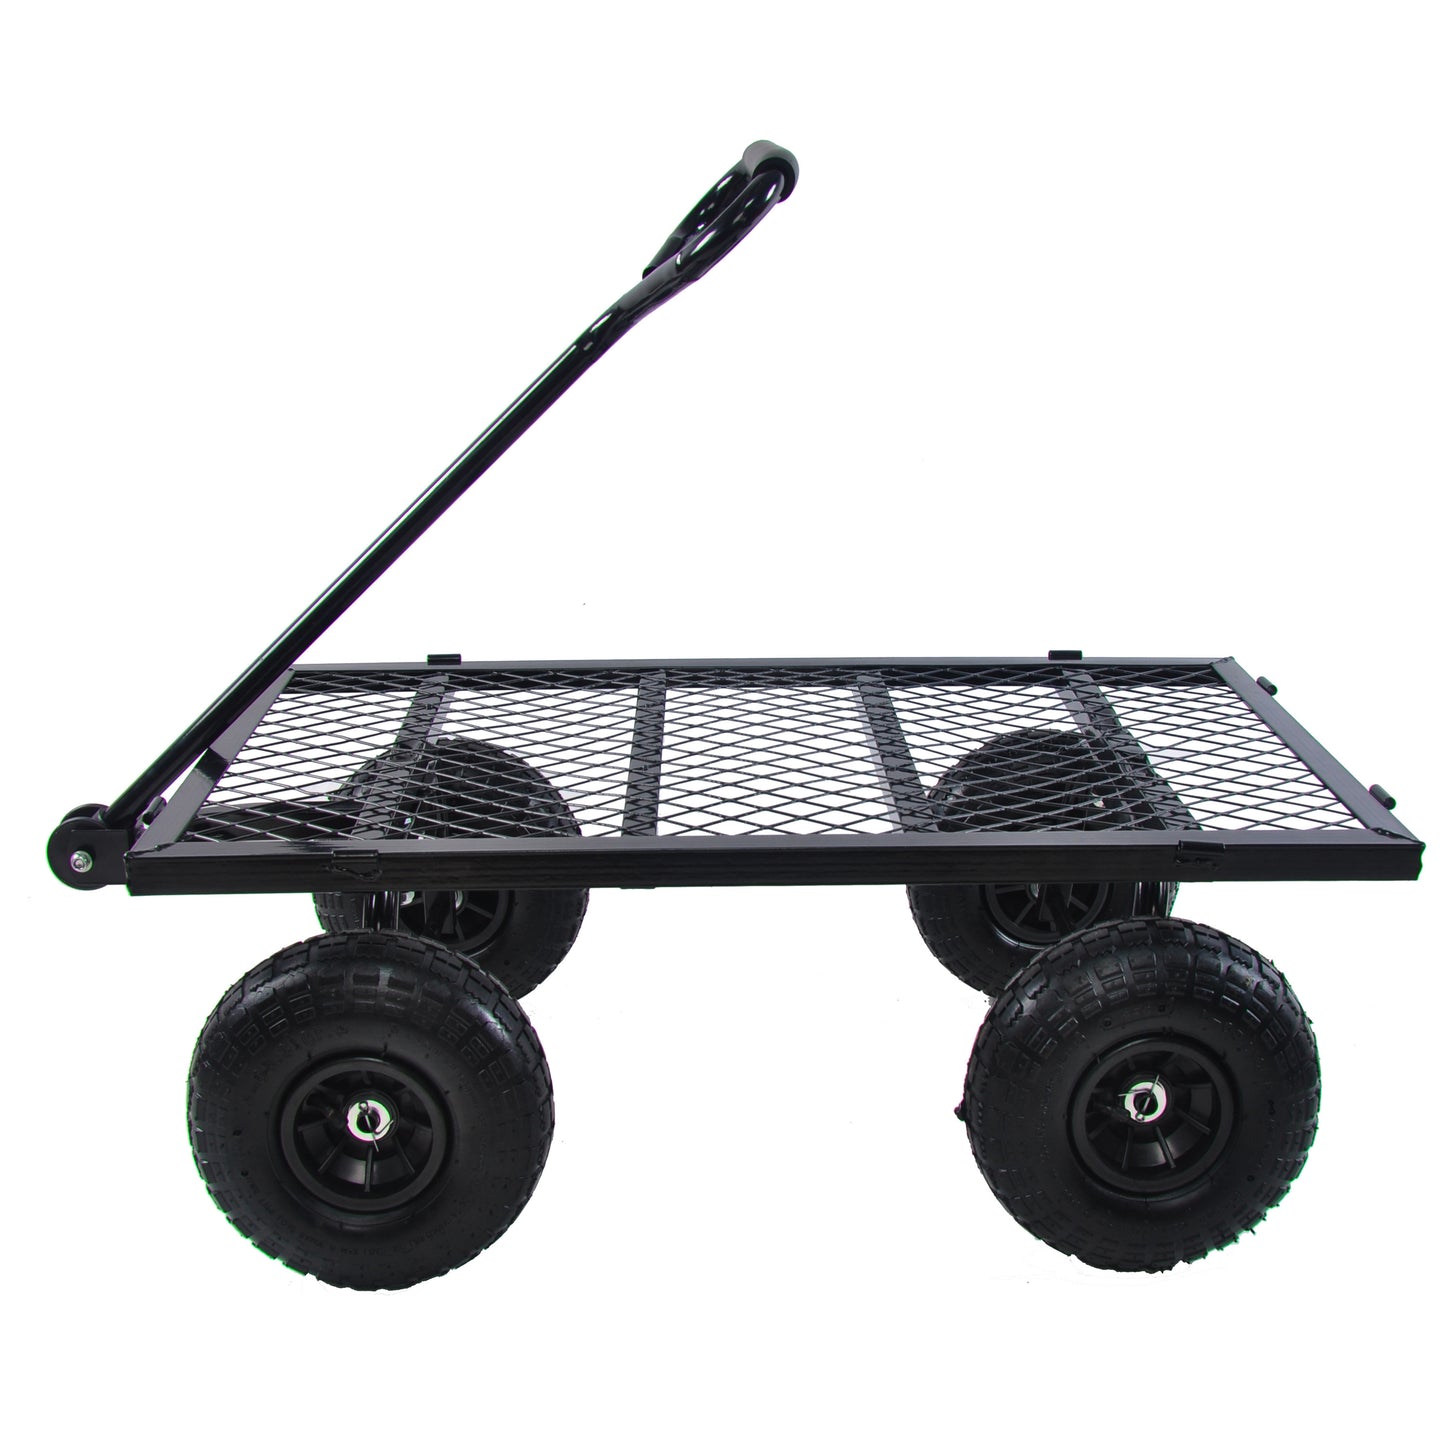 Wagon Cart Garden cart trucks make it easier to transport firewood TC1840BKG